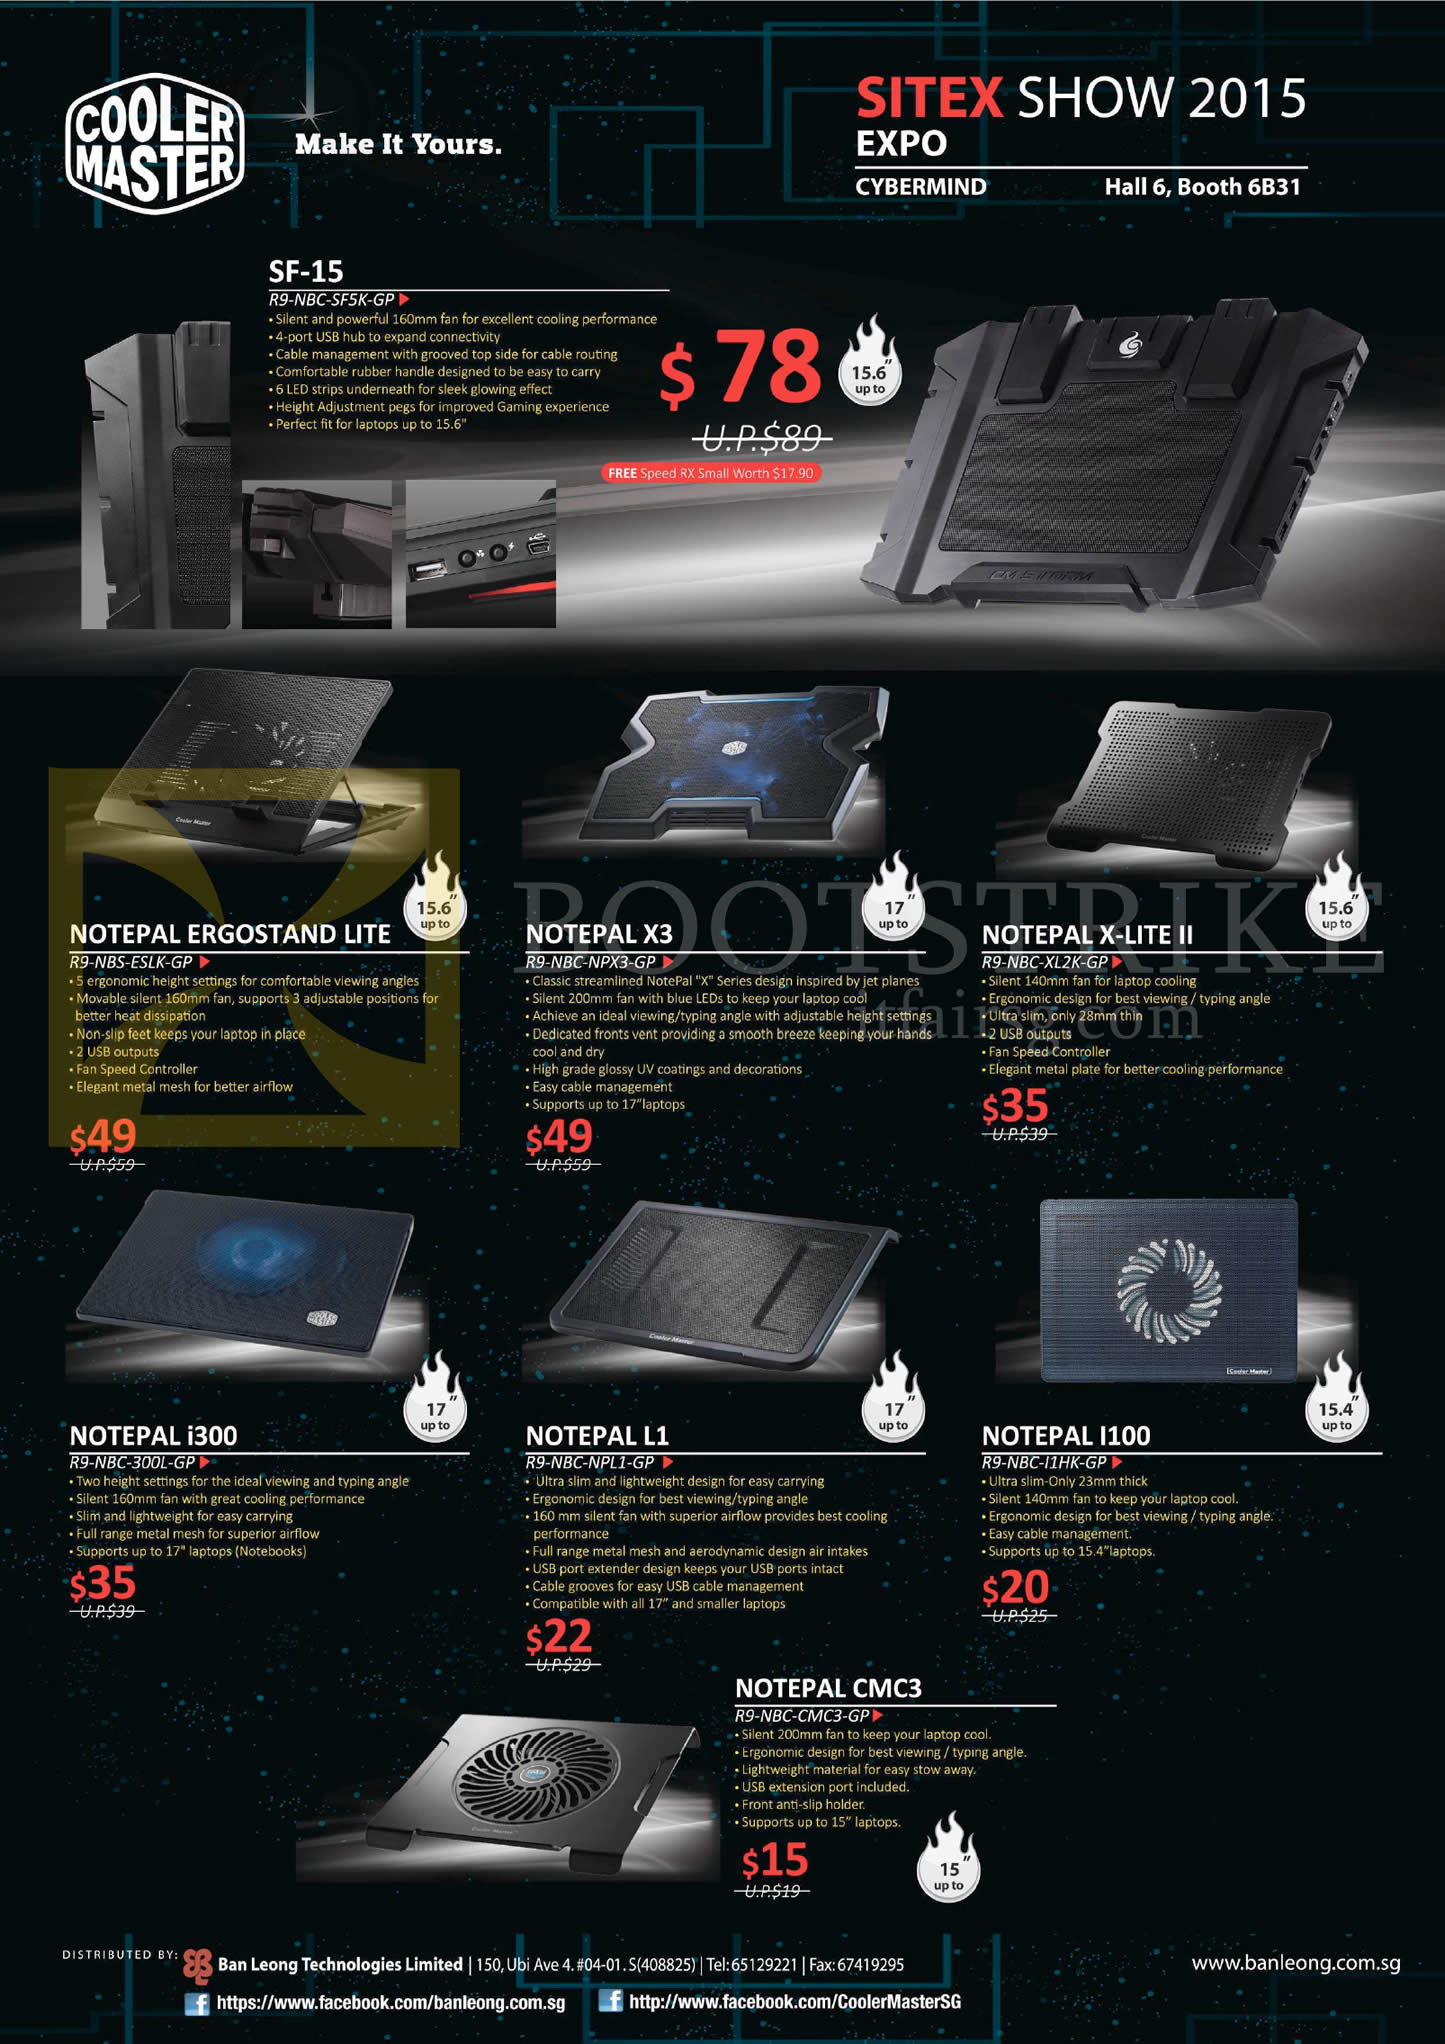 SITEX 2015 price list image brochure of Cooler Master Notebook Cooler SF-15, Notepal Ergostand Lite, X3, X-Lite II, I300, L1, L100, CMC3